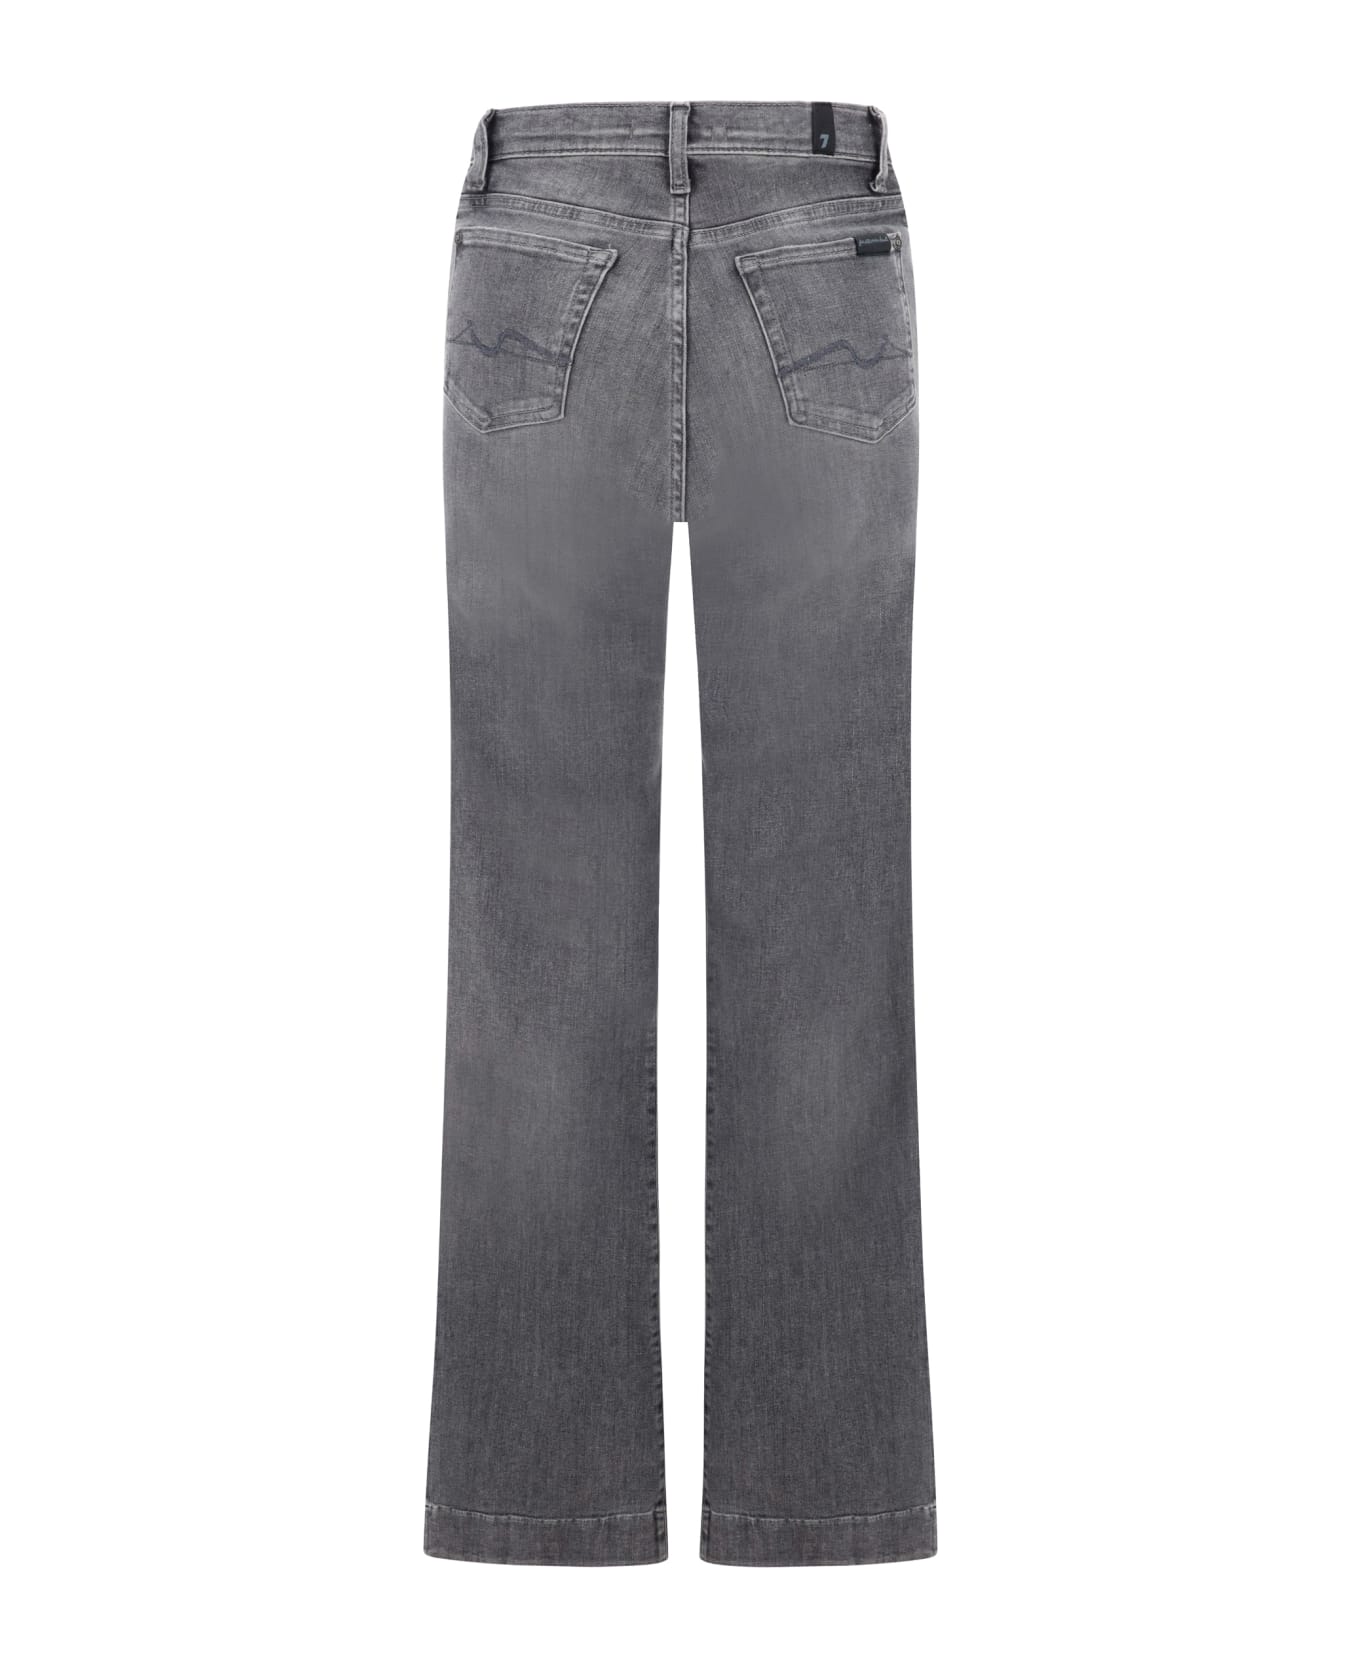 7 For All Mankind Dojo Soho Jeans - Grey